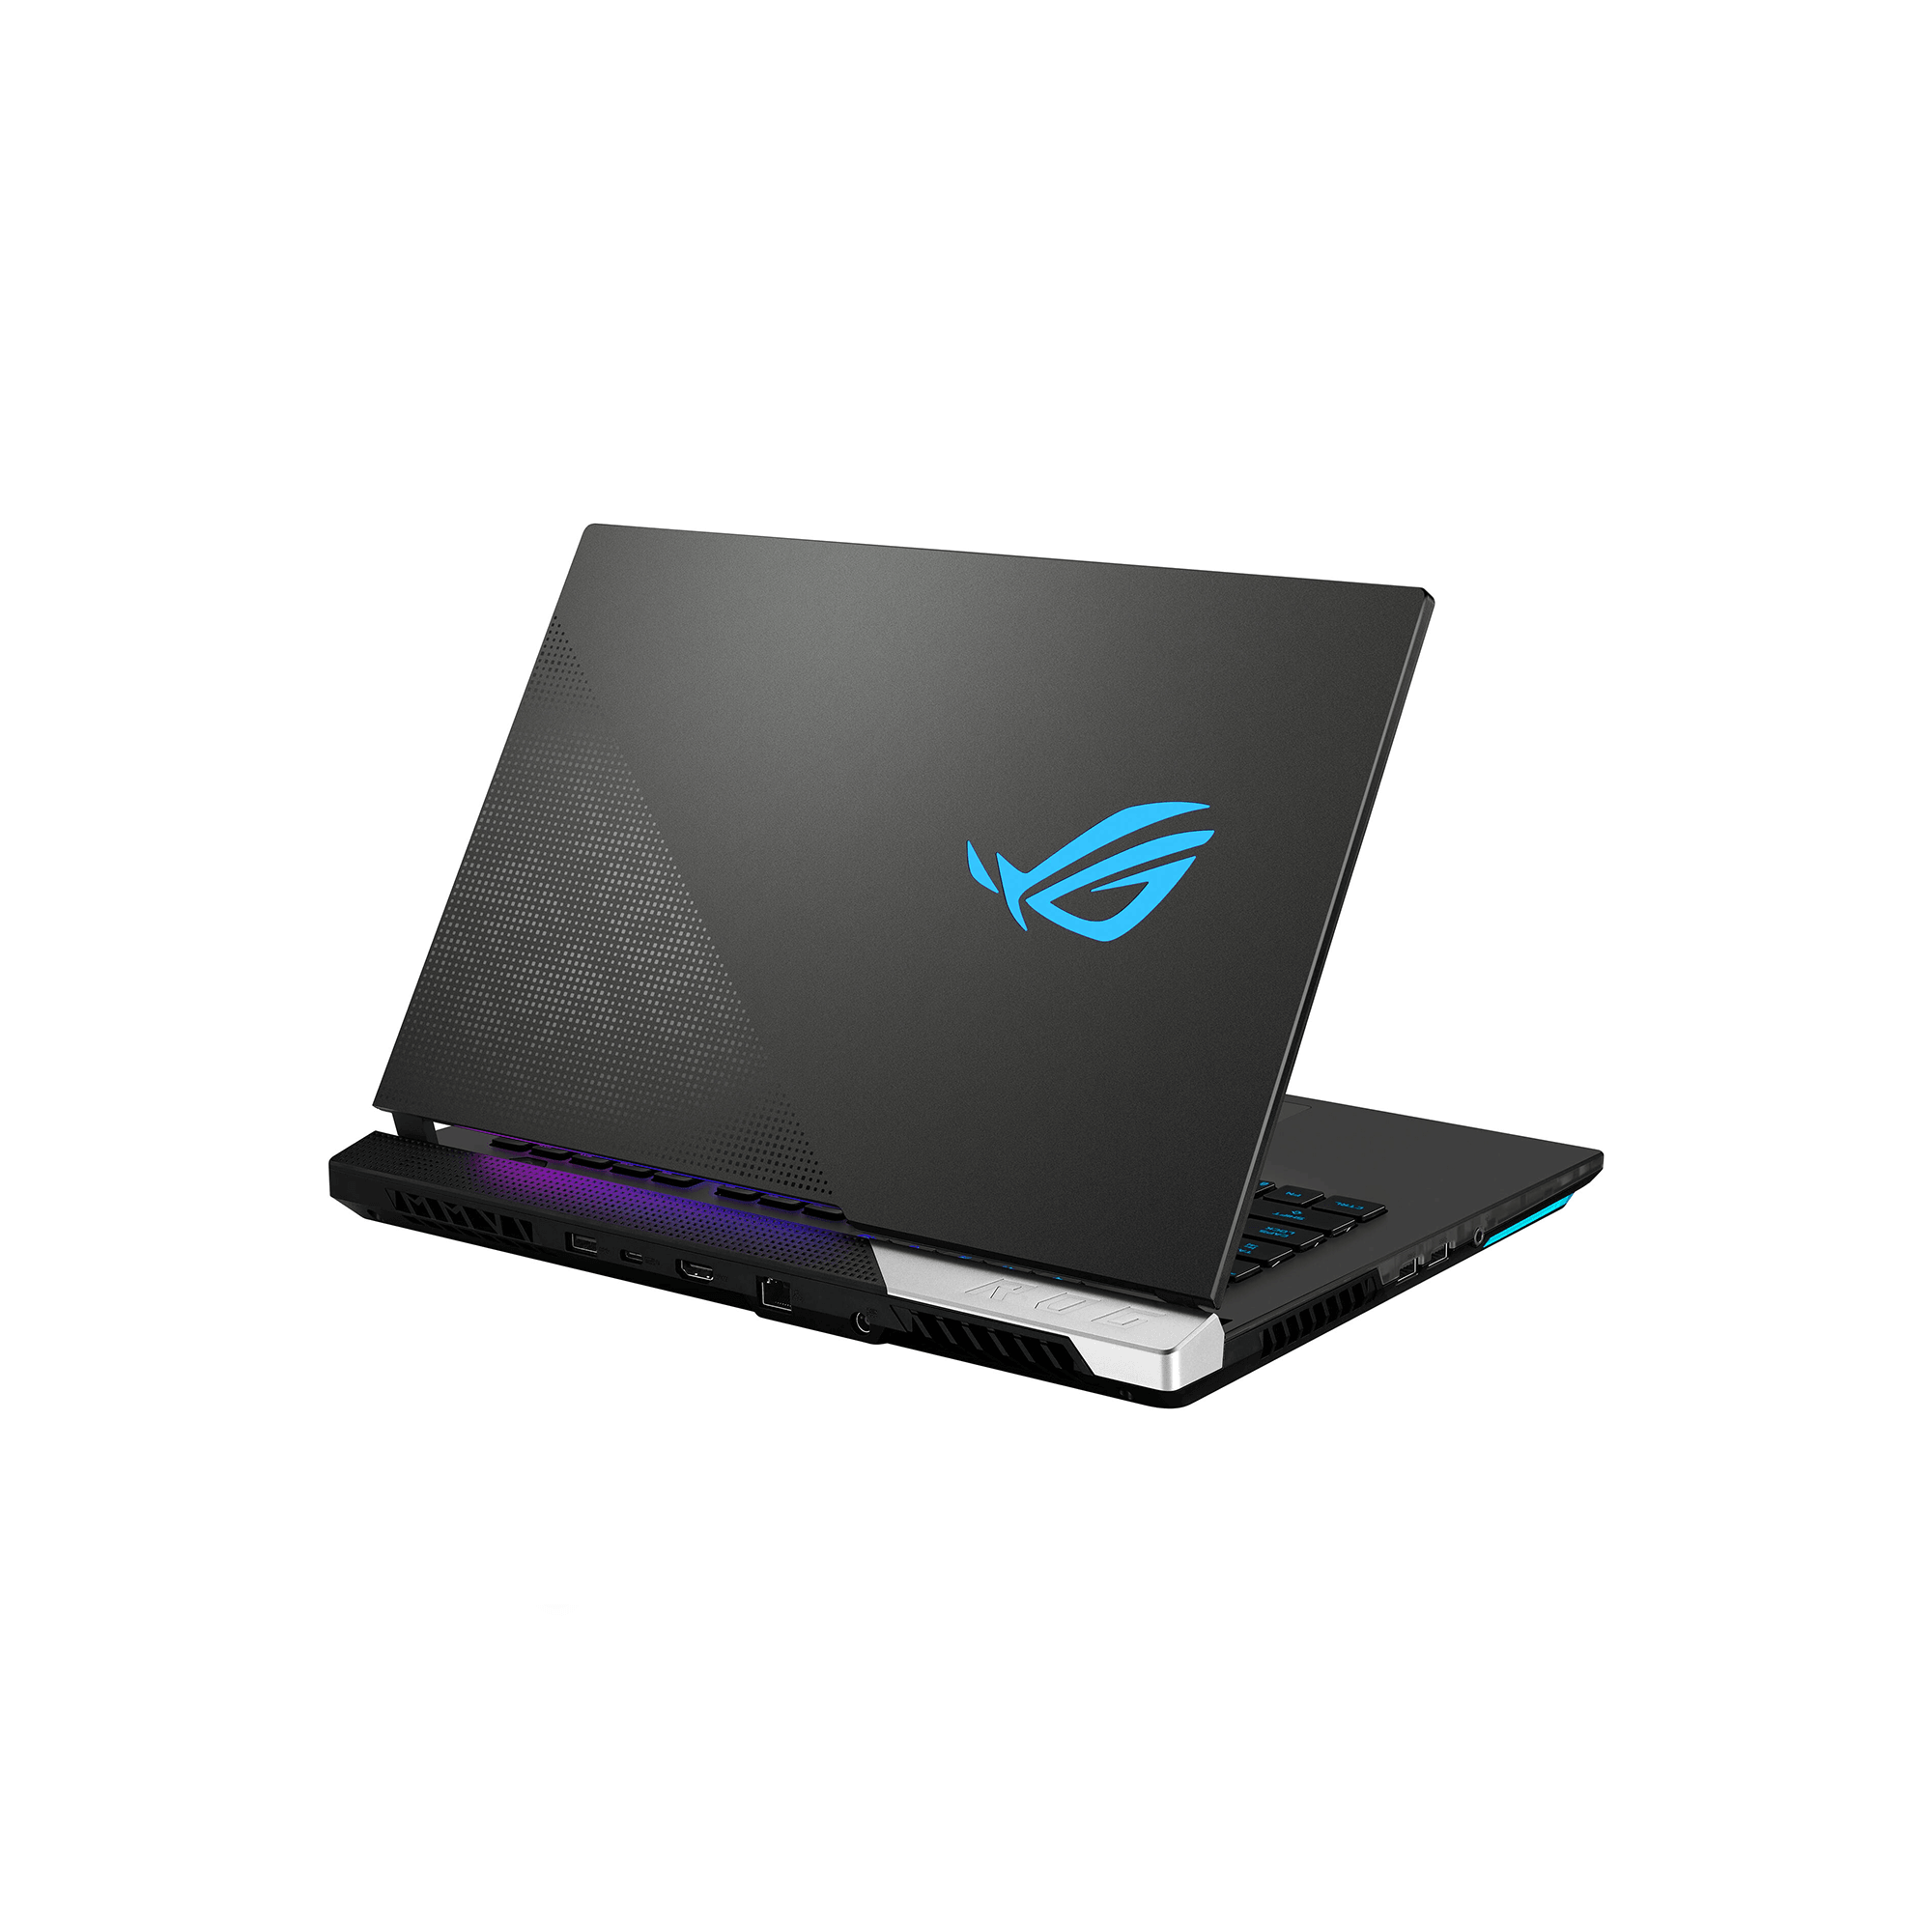 Asus Rog Strix Scar 15 Gaming Laptop, AMD Ryzen 9 5900HX,15.6" FullHD, RTX 3080, Windows 11 Home